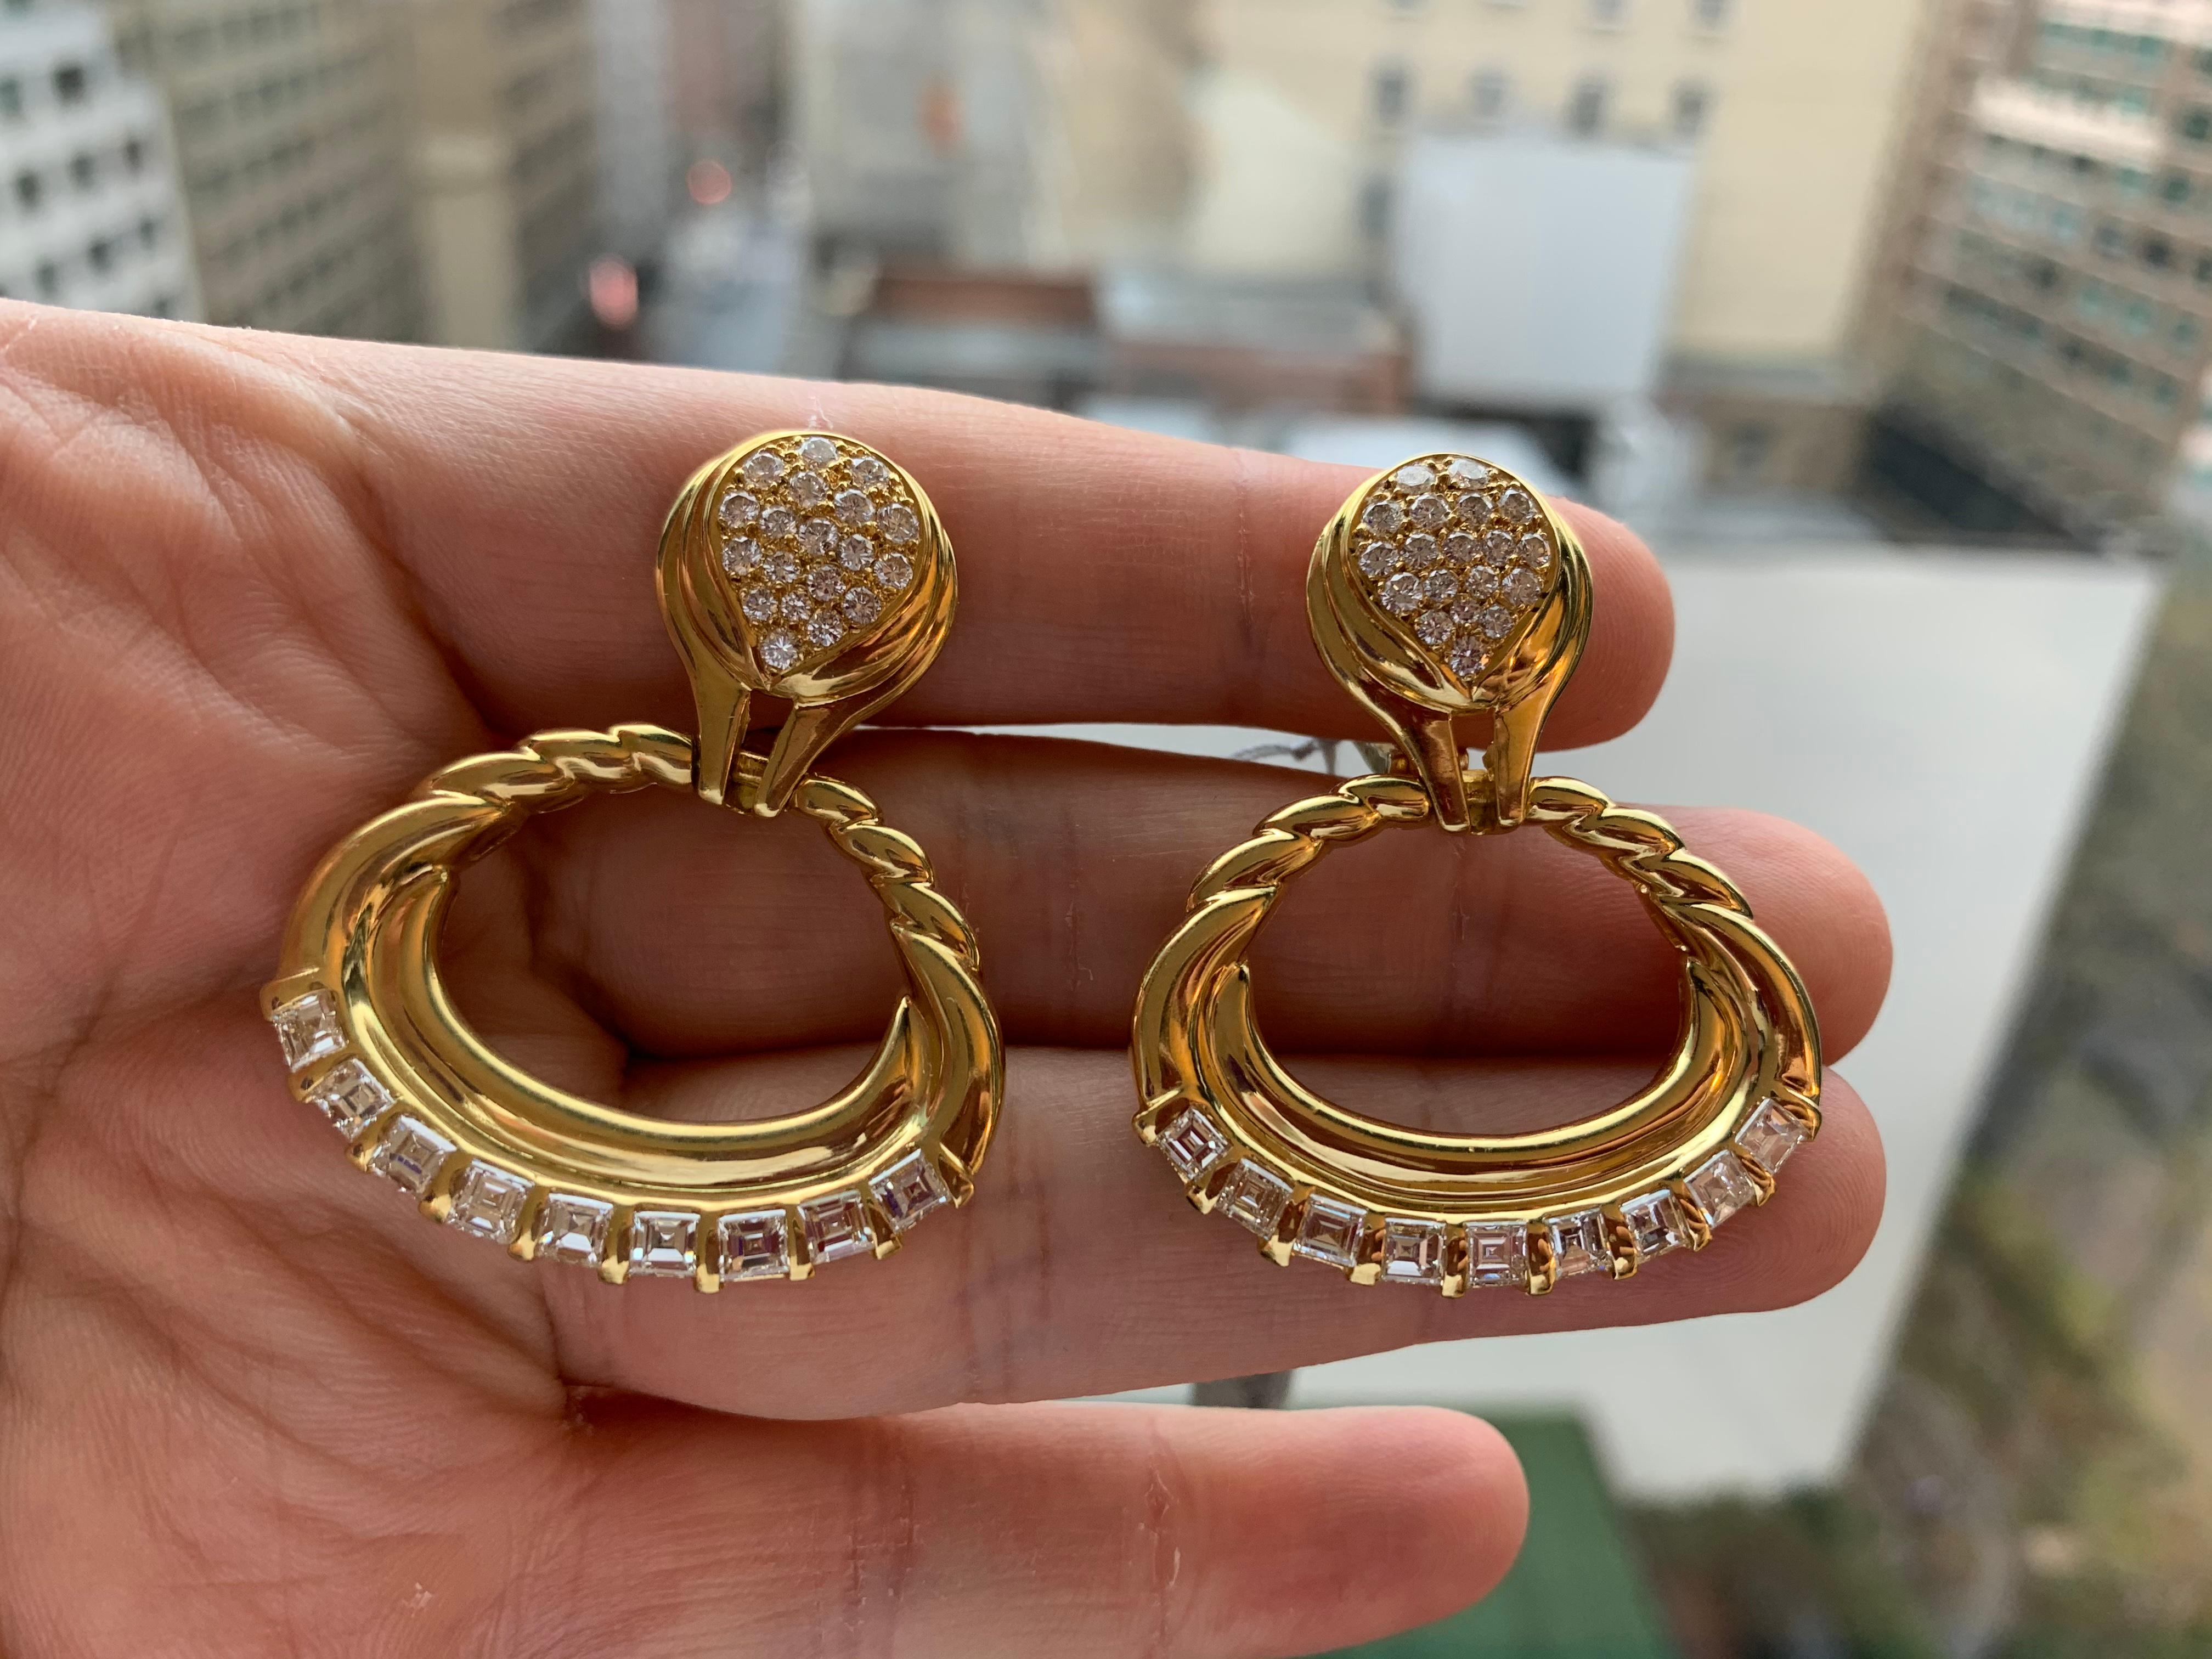 Diamond Door Knocker Earrings

Approx:
3.29 ct Baguette Diamonds
1.33 round diamonds 

18 Karat Gold